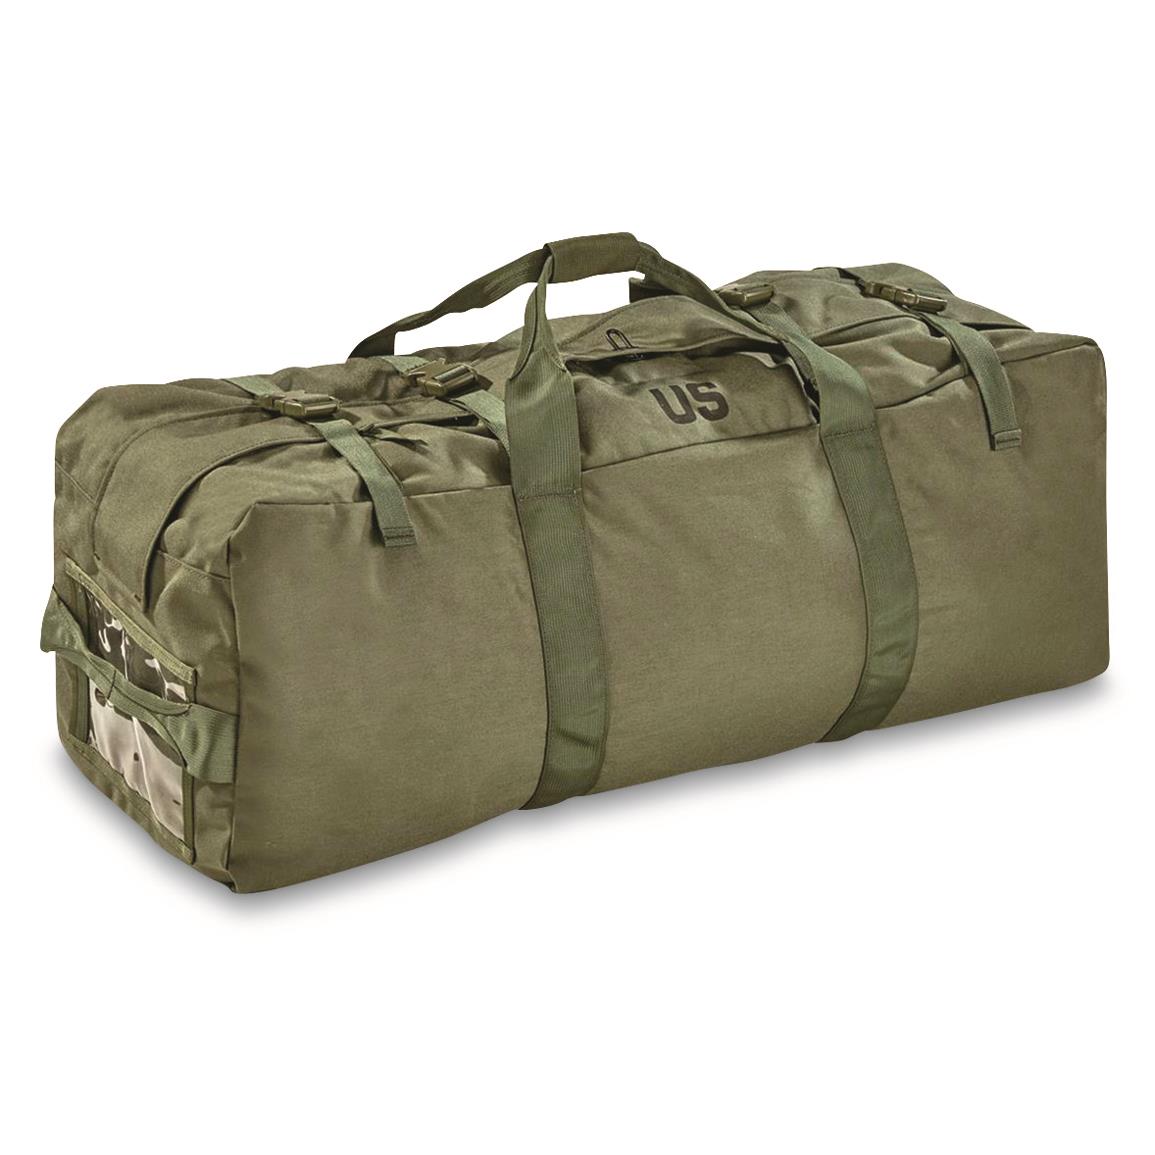 U.S. Military Surplus Zip Duffel Bag, Olive Drab